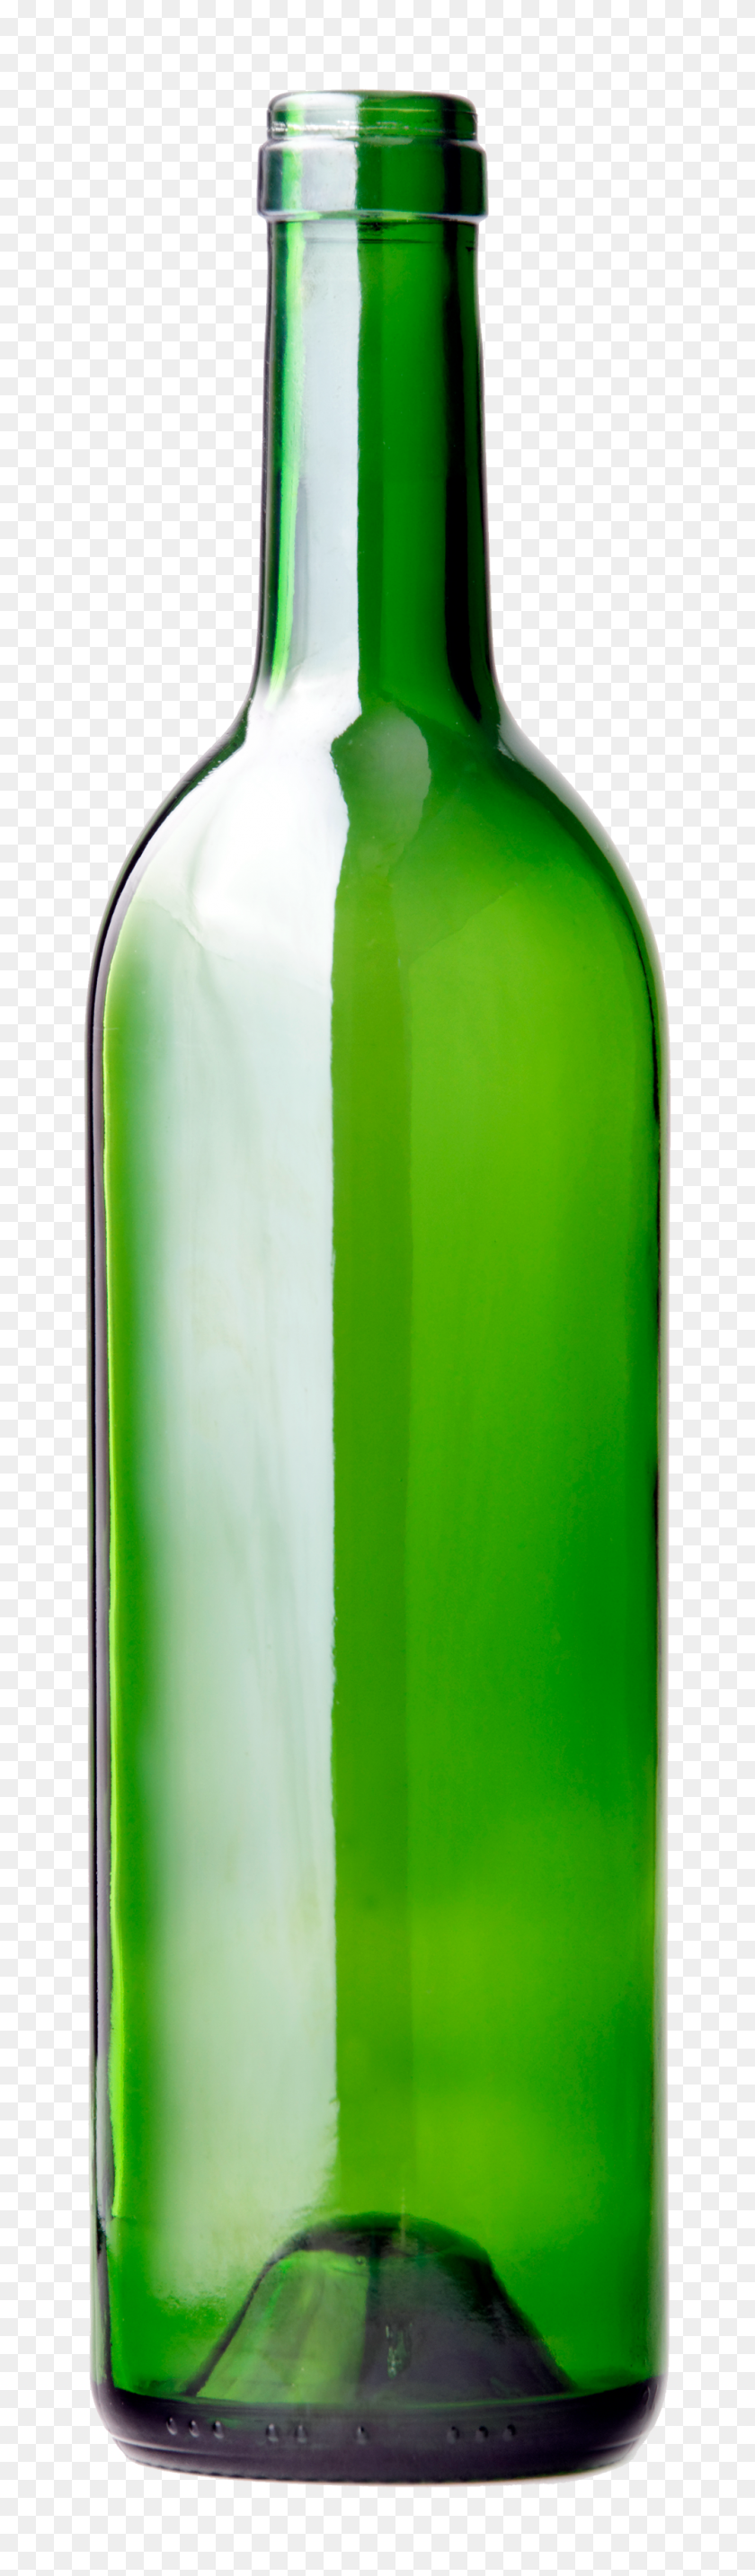 1000x3600 Bottle Png Images, Free Download - Plastic Bottle PNG